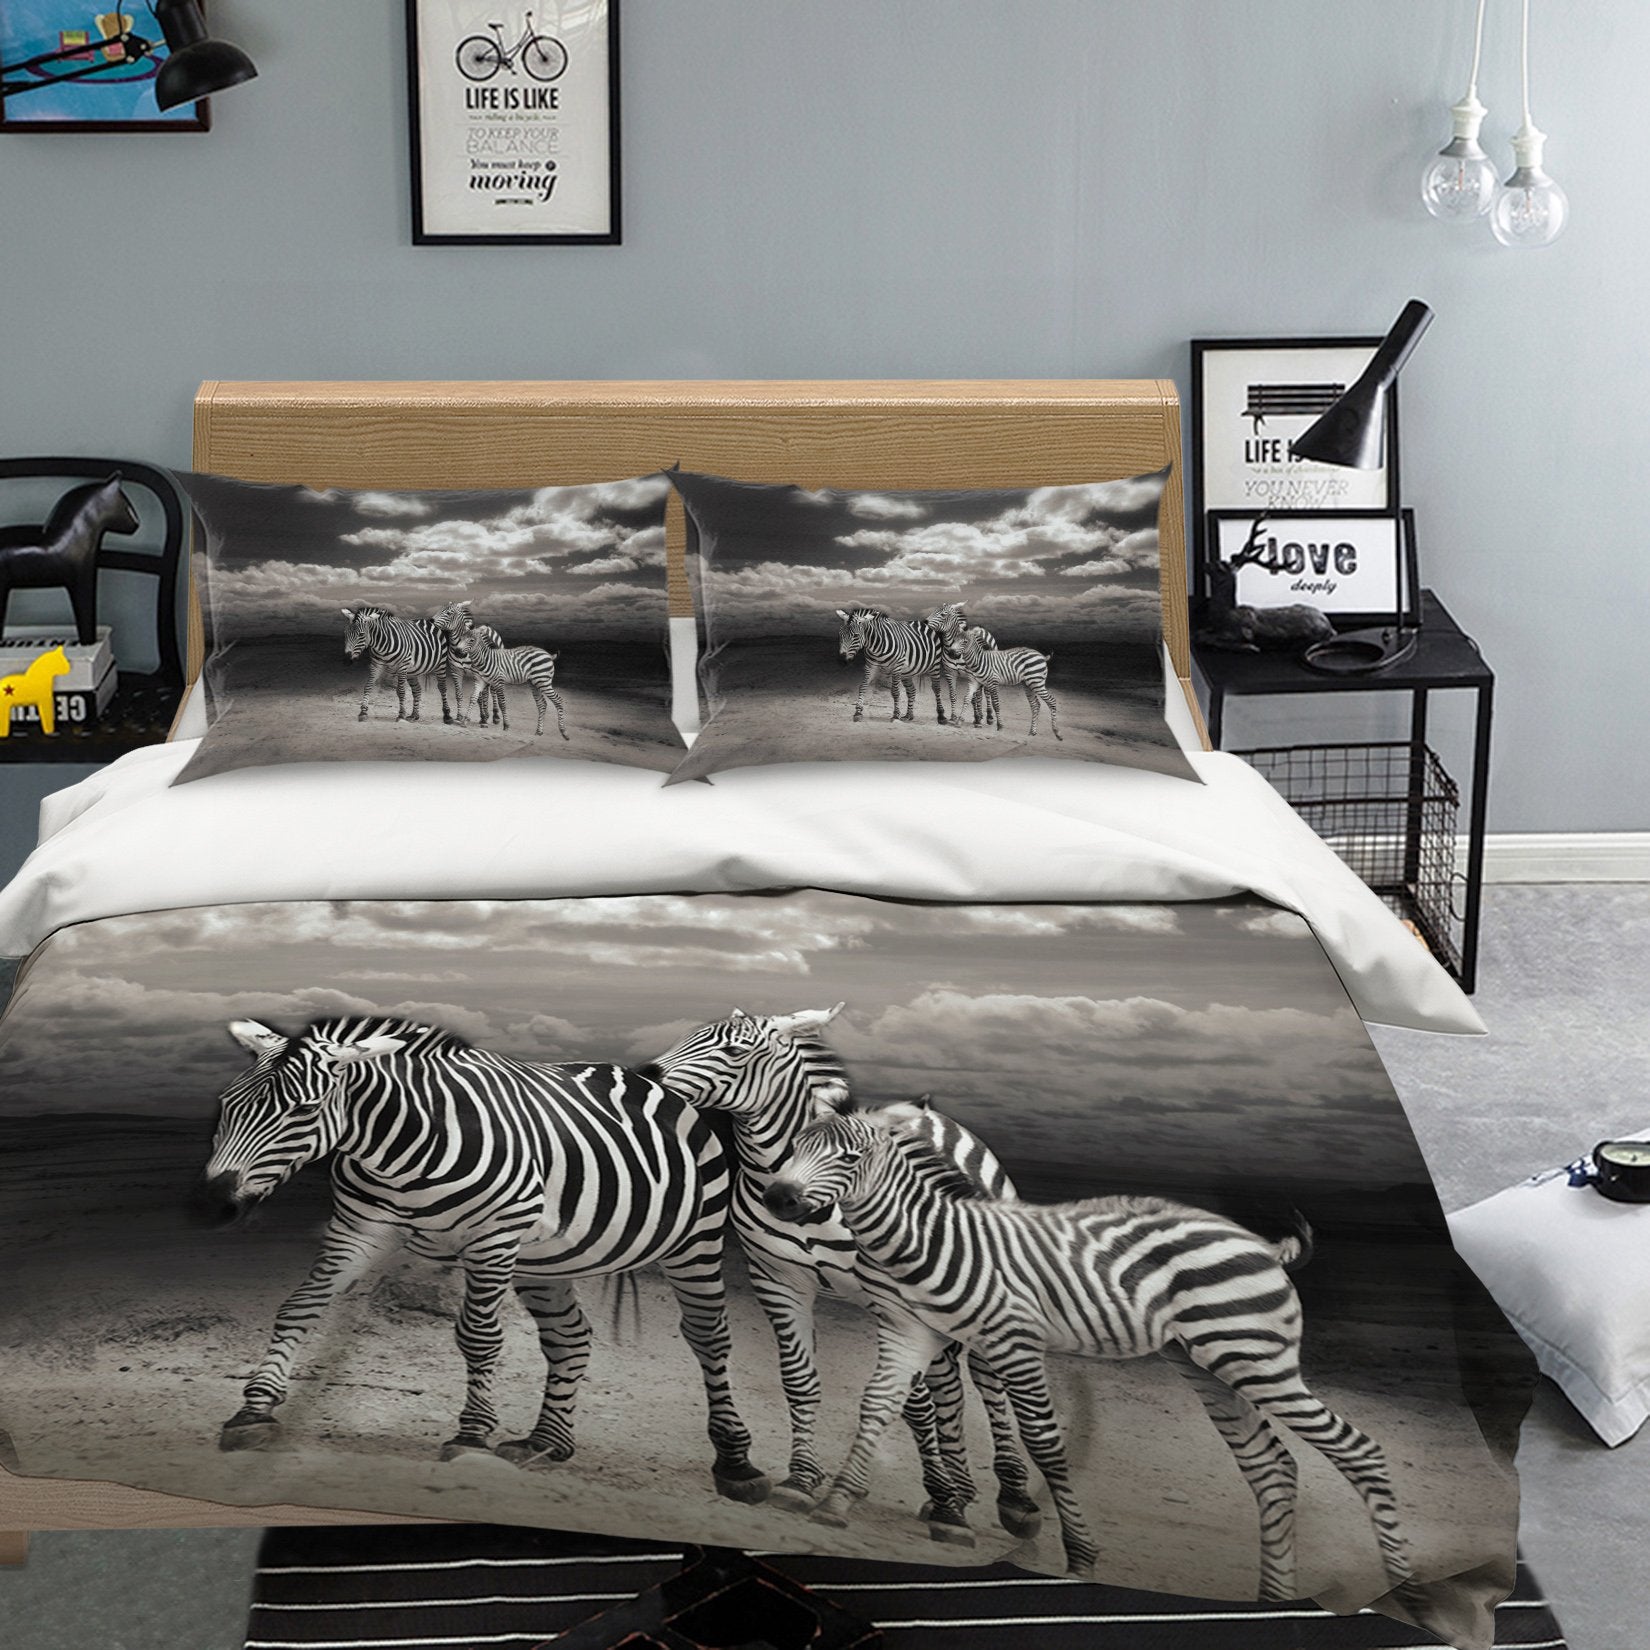 3D Zebra Family 2015 Bed Pillowcases Quilt Quiet Covers AJ Creativity Home 